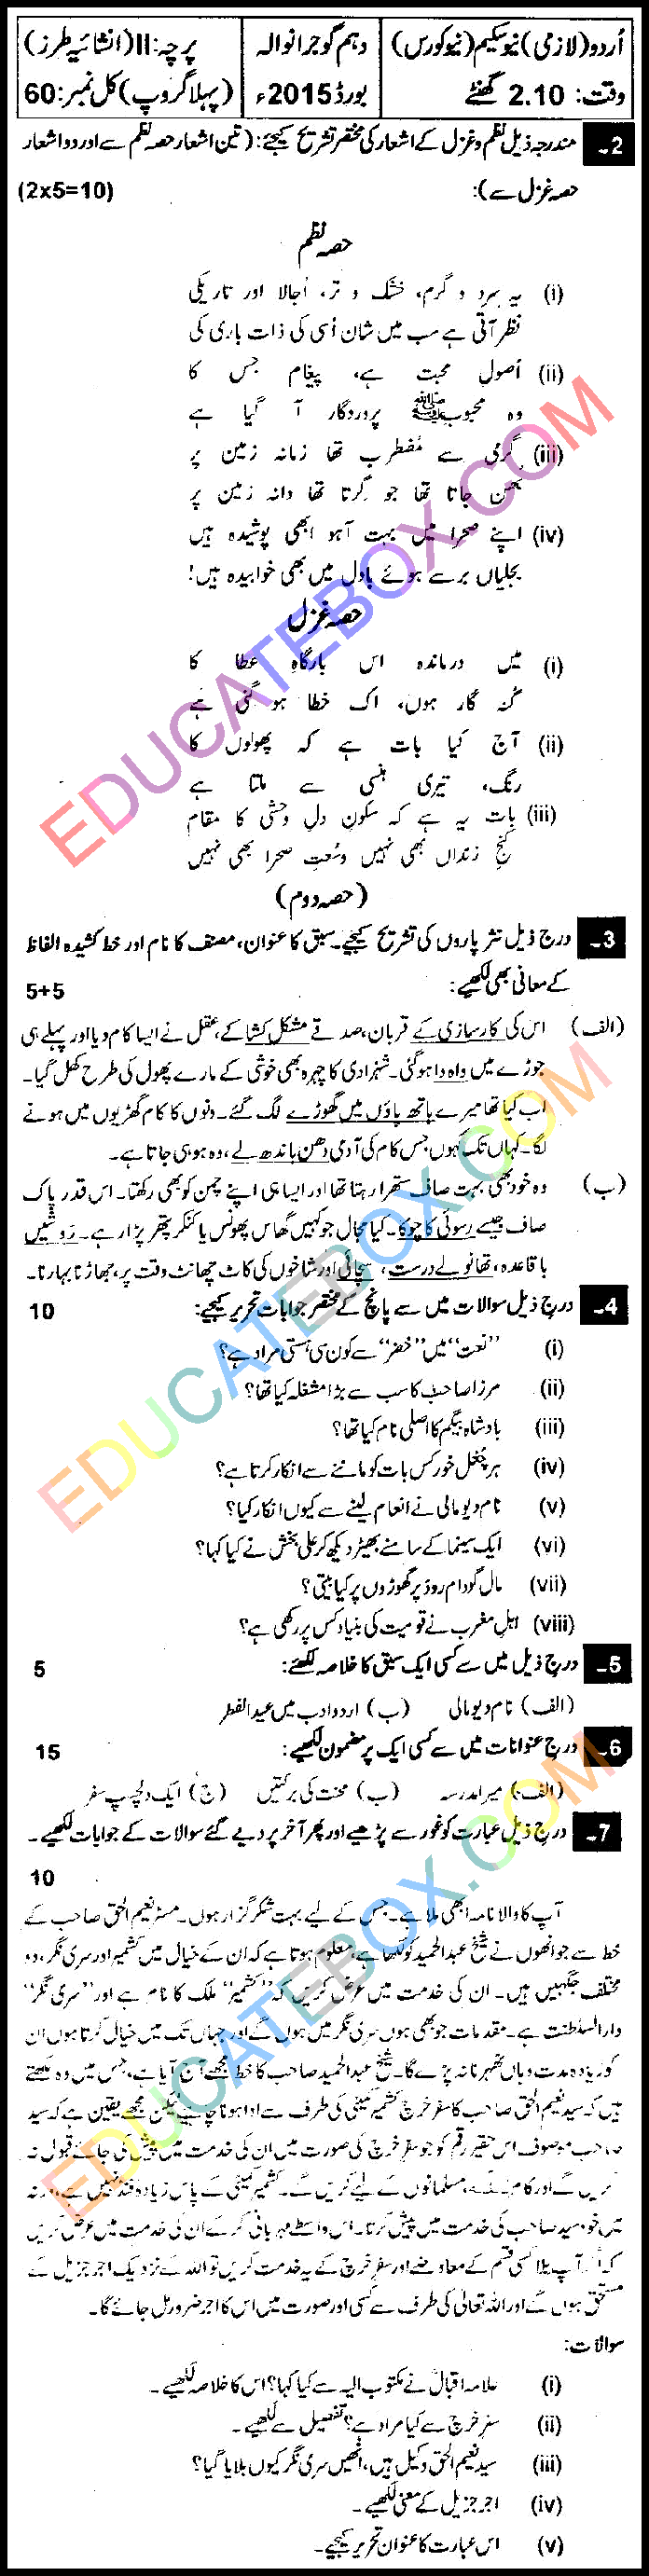 Past Paper 10th Class Urdu Gujranwala Board 2015 Group 1 Subjective Type اپ ٹو ڈیٹ پیپر اردو 2015 پہلا گروپ جماعت دہم گوجرانوالہ بورڈ انشائیہ طرز